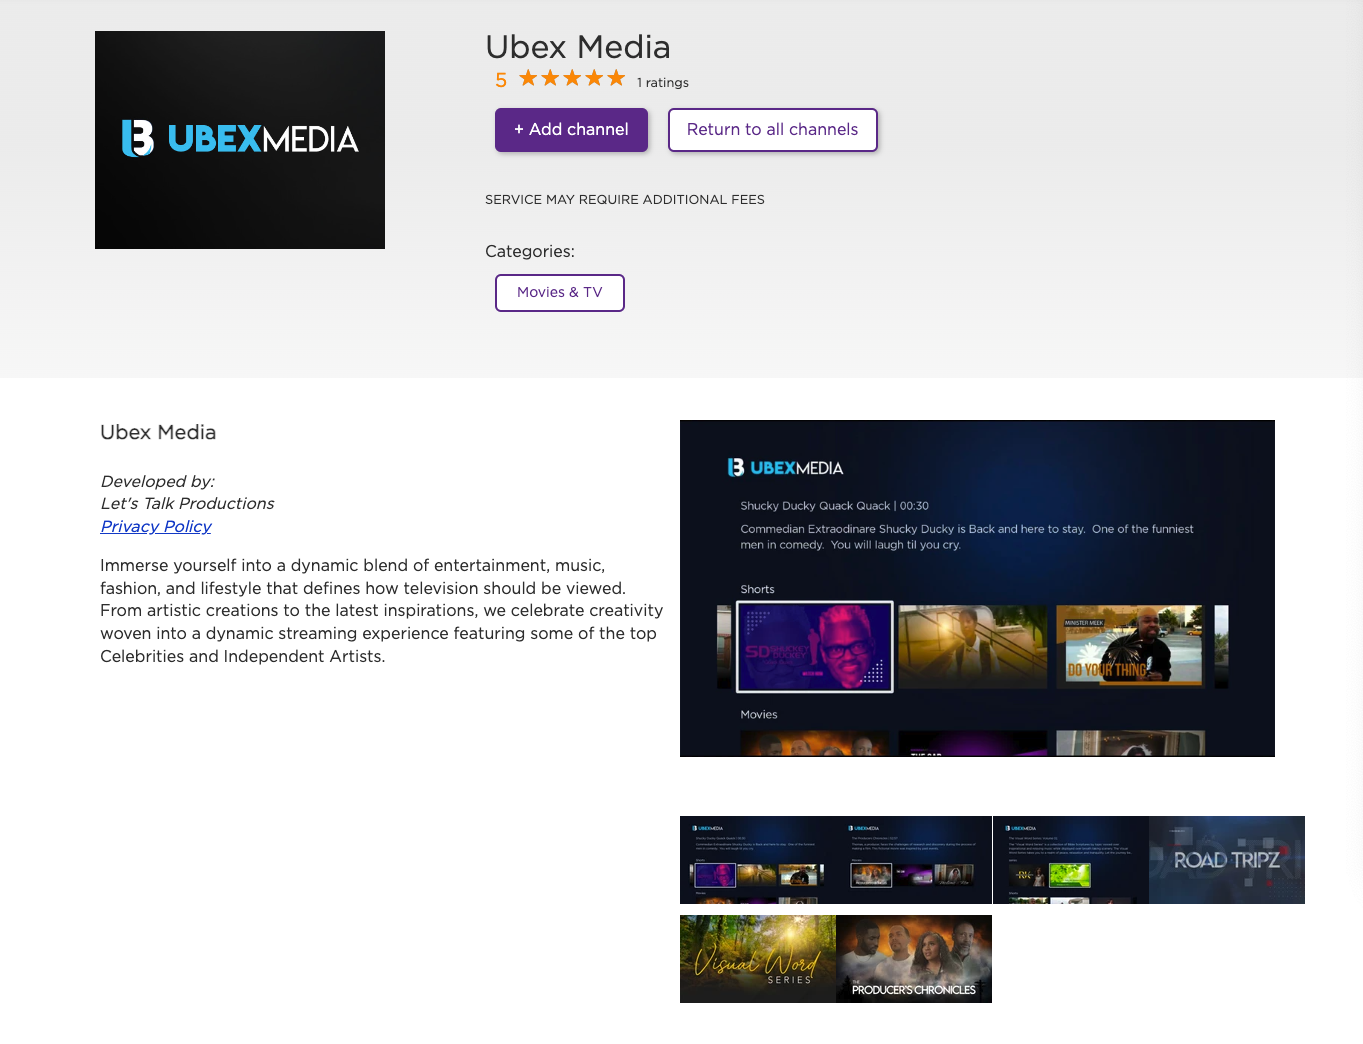 How to watch UBEX Media